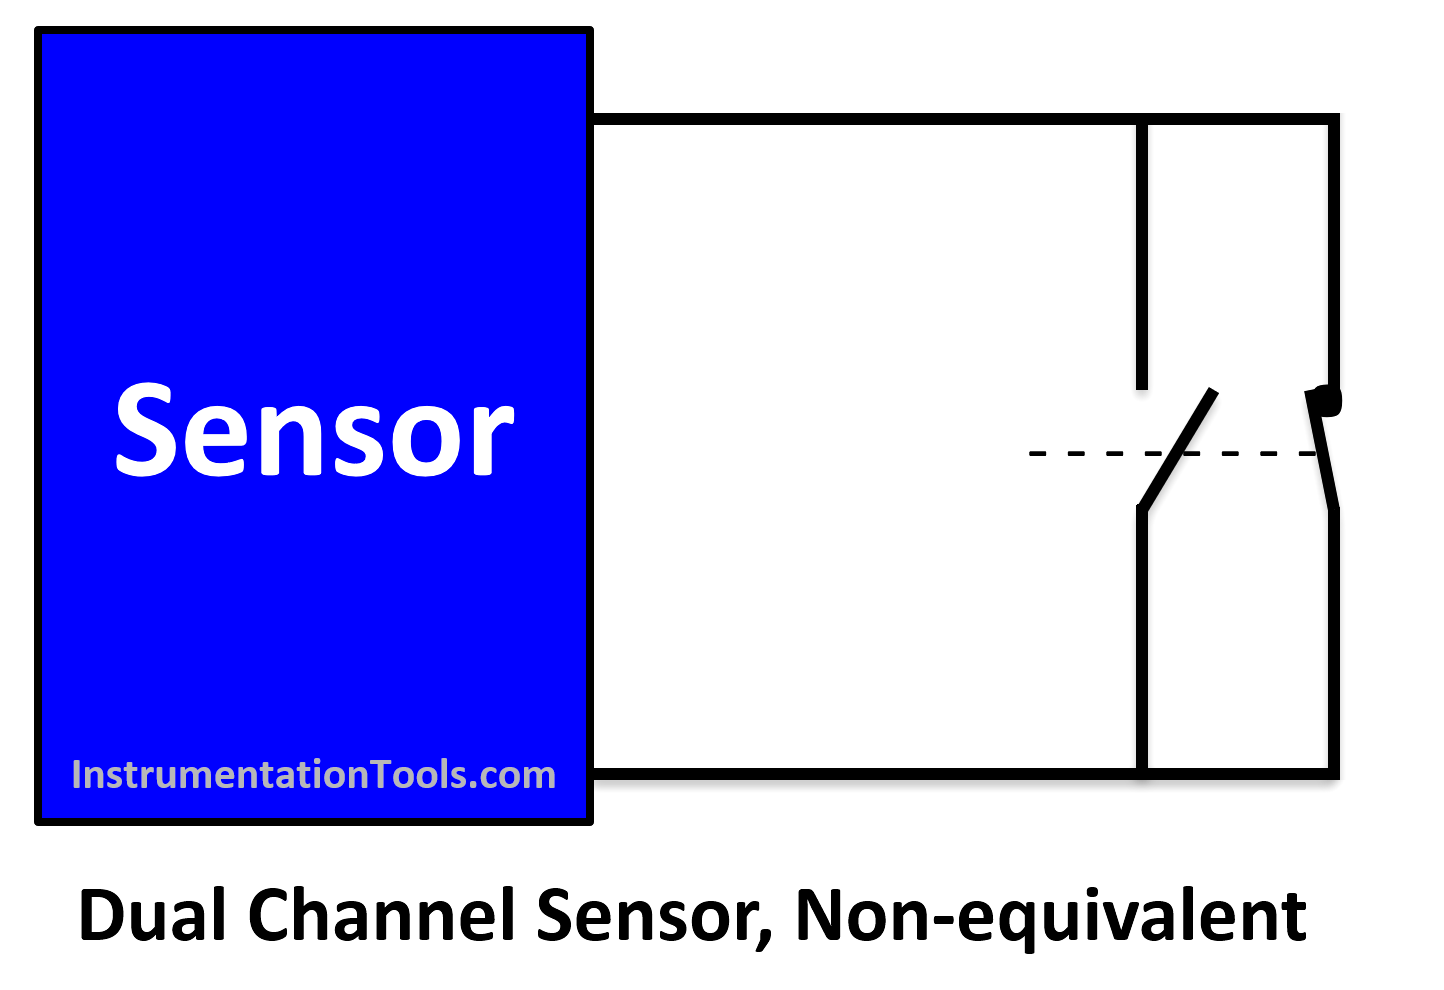 Sensors redundancy safety components